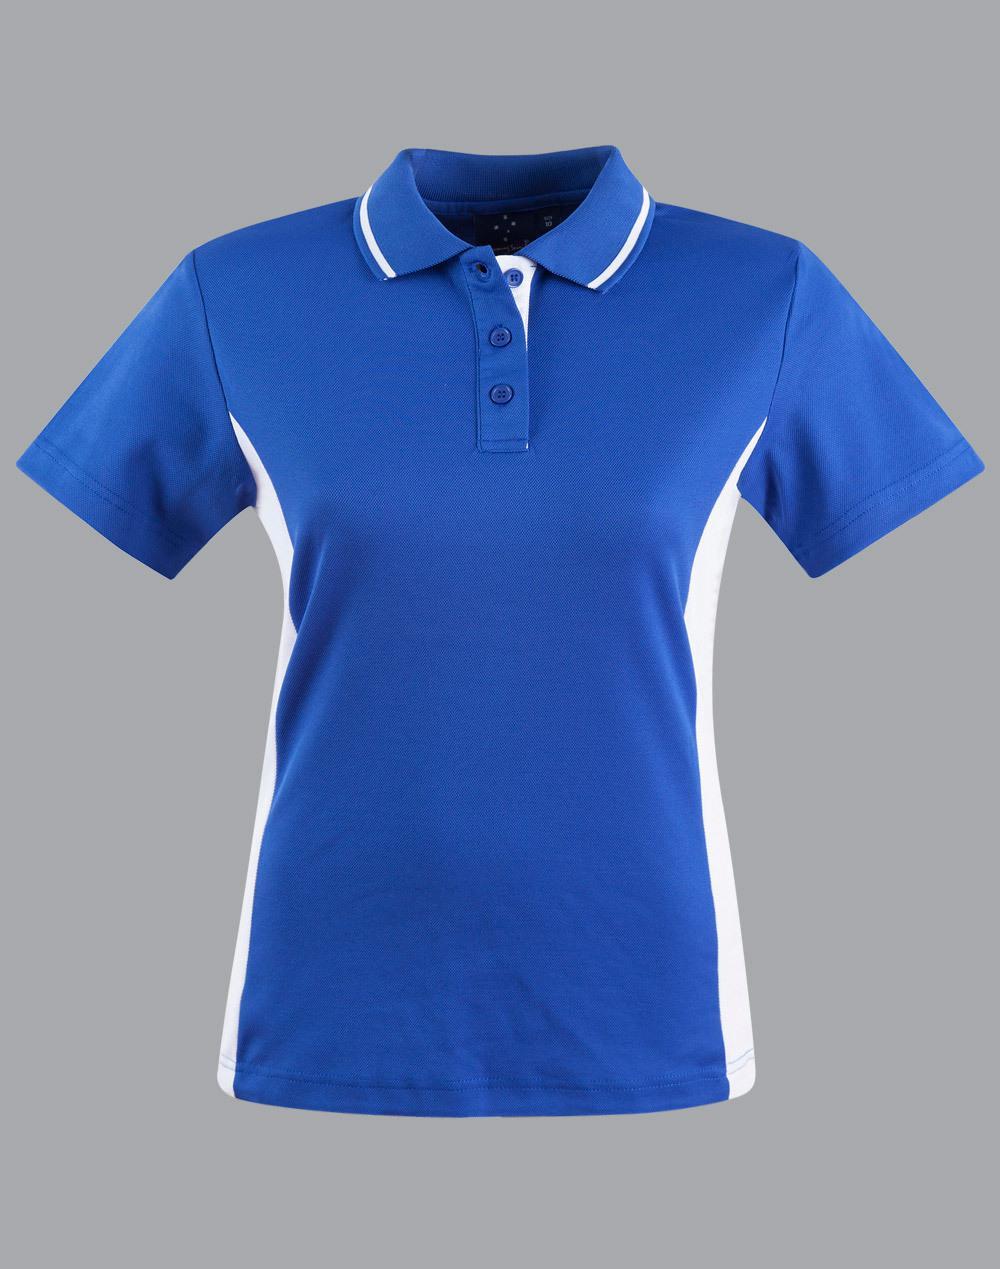 PS74 Sz 10 TEAMMATE Cotton Polyester Ladies Polo Shirt Royal Blue/White